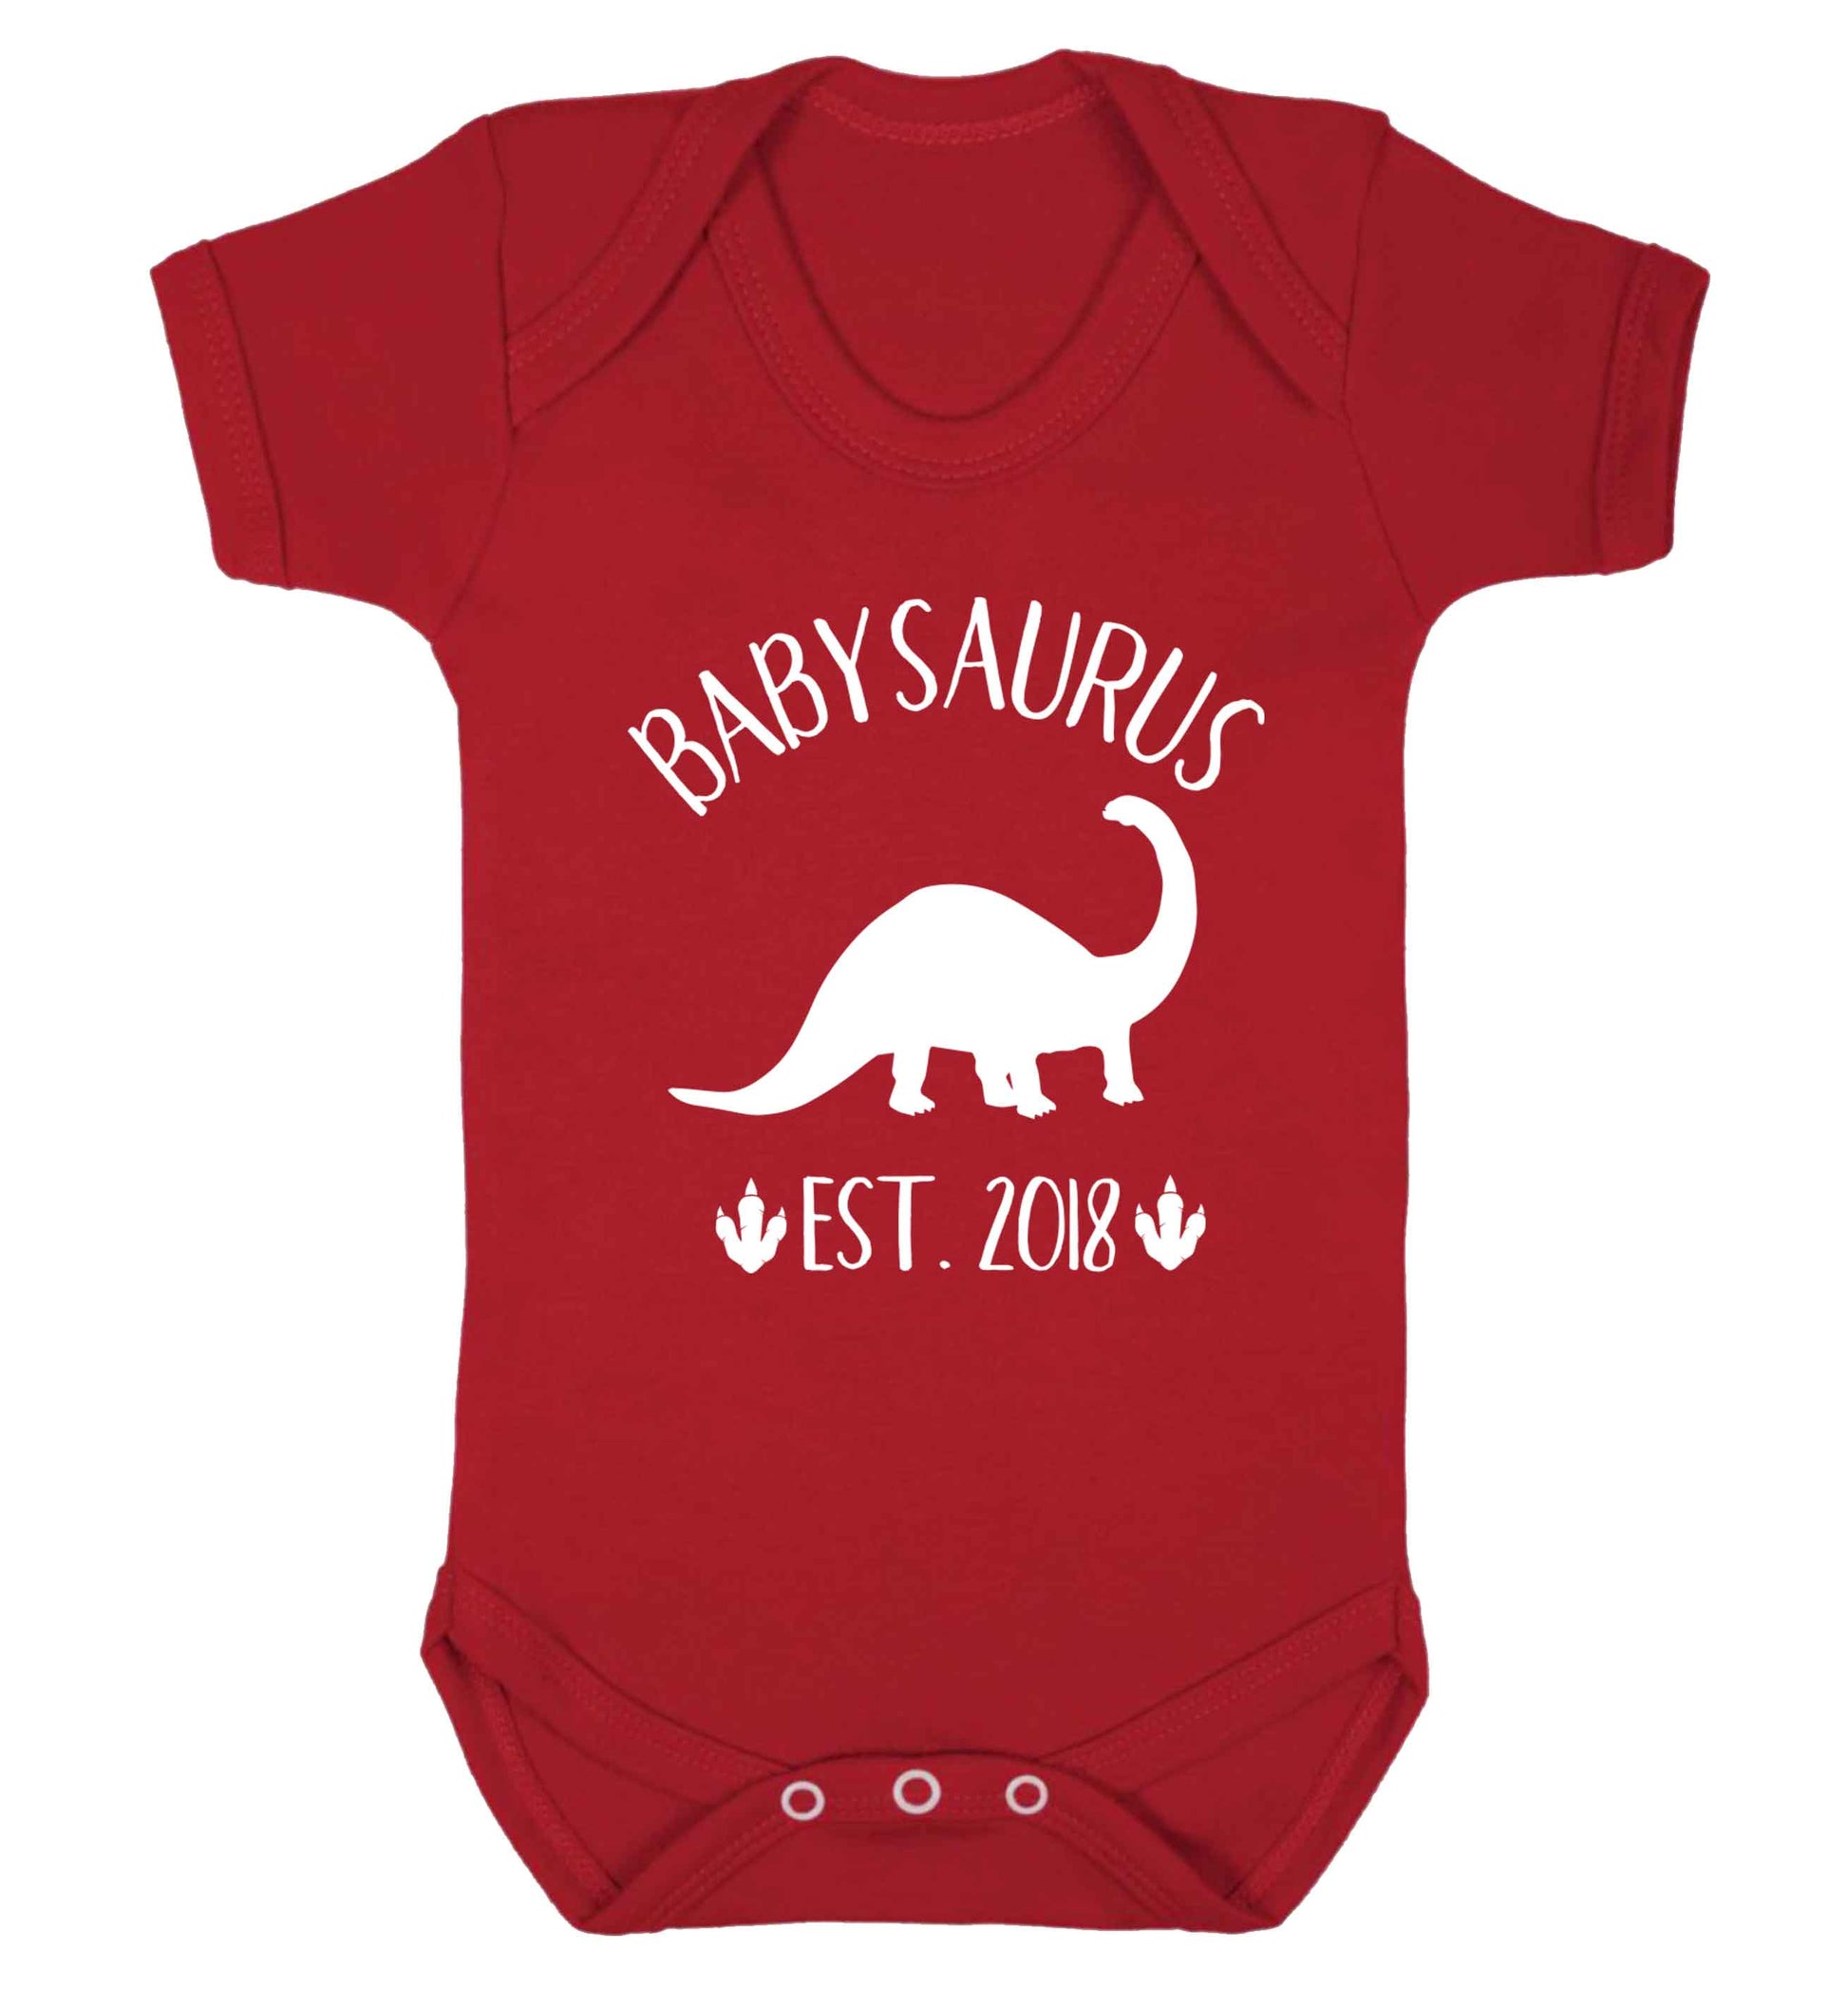 Personalised babysaurus since (custom date) Baby Vest red 18-24 months